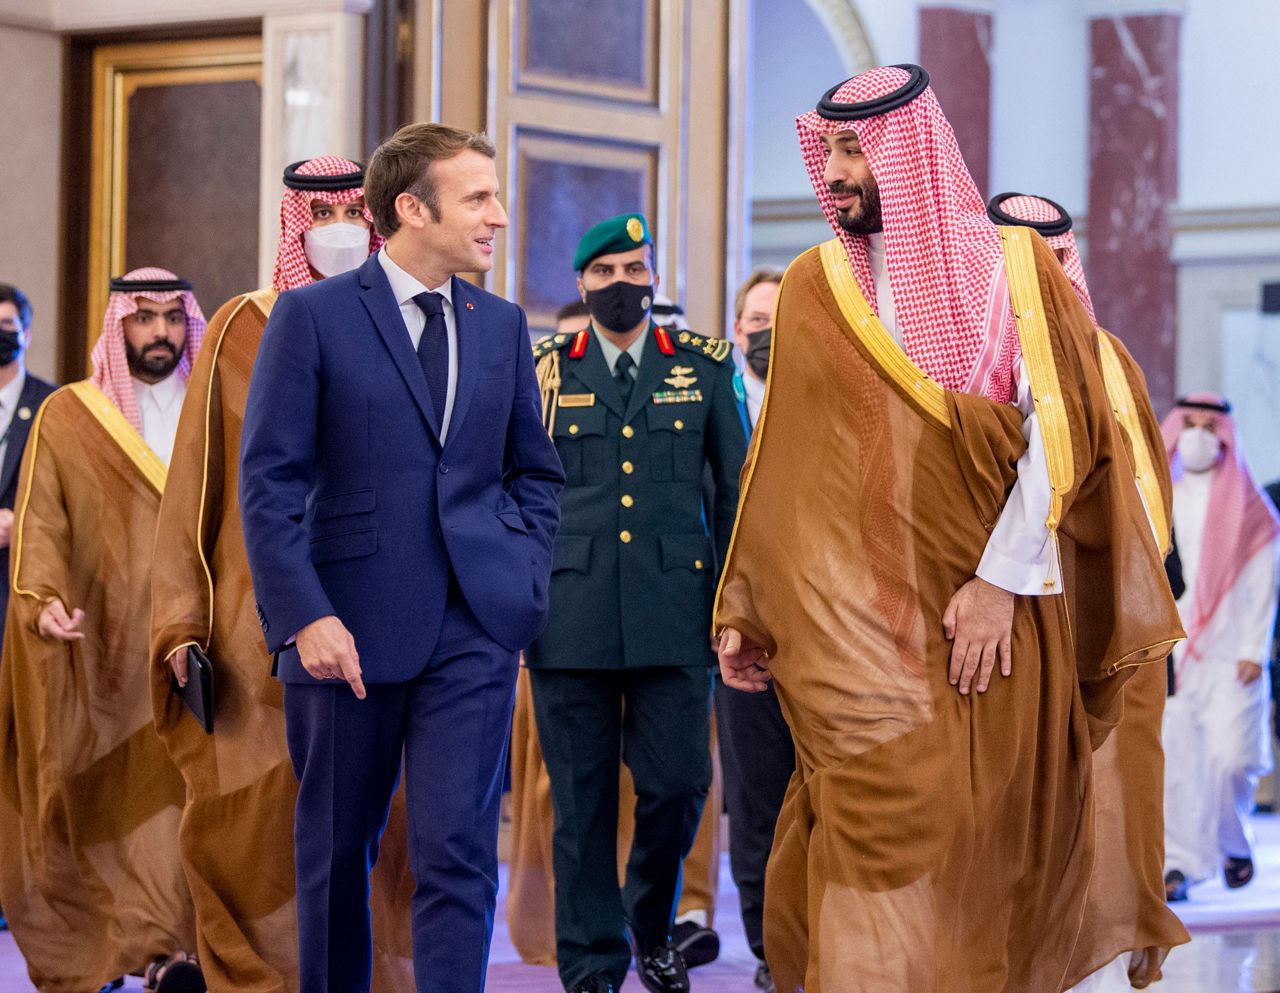 France's Emmanuel Macron meet Crown Prince Mohammed bin Salman in Saudi visit to ease tension with Lebanon